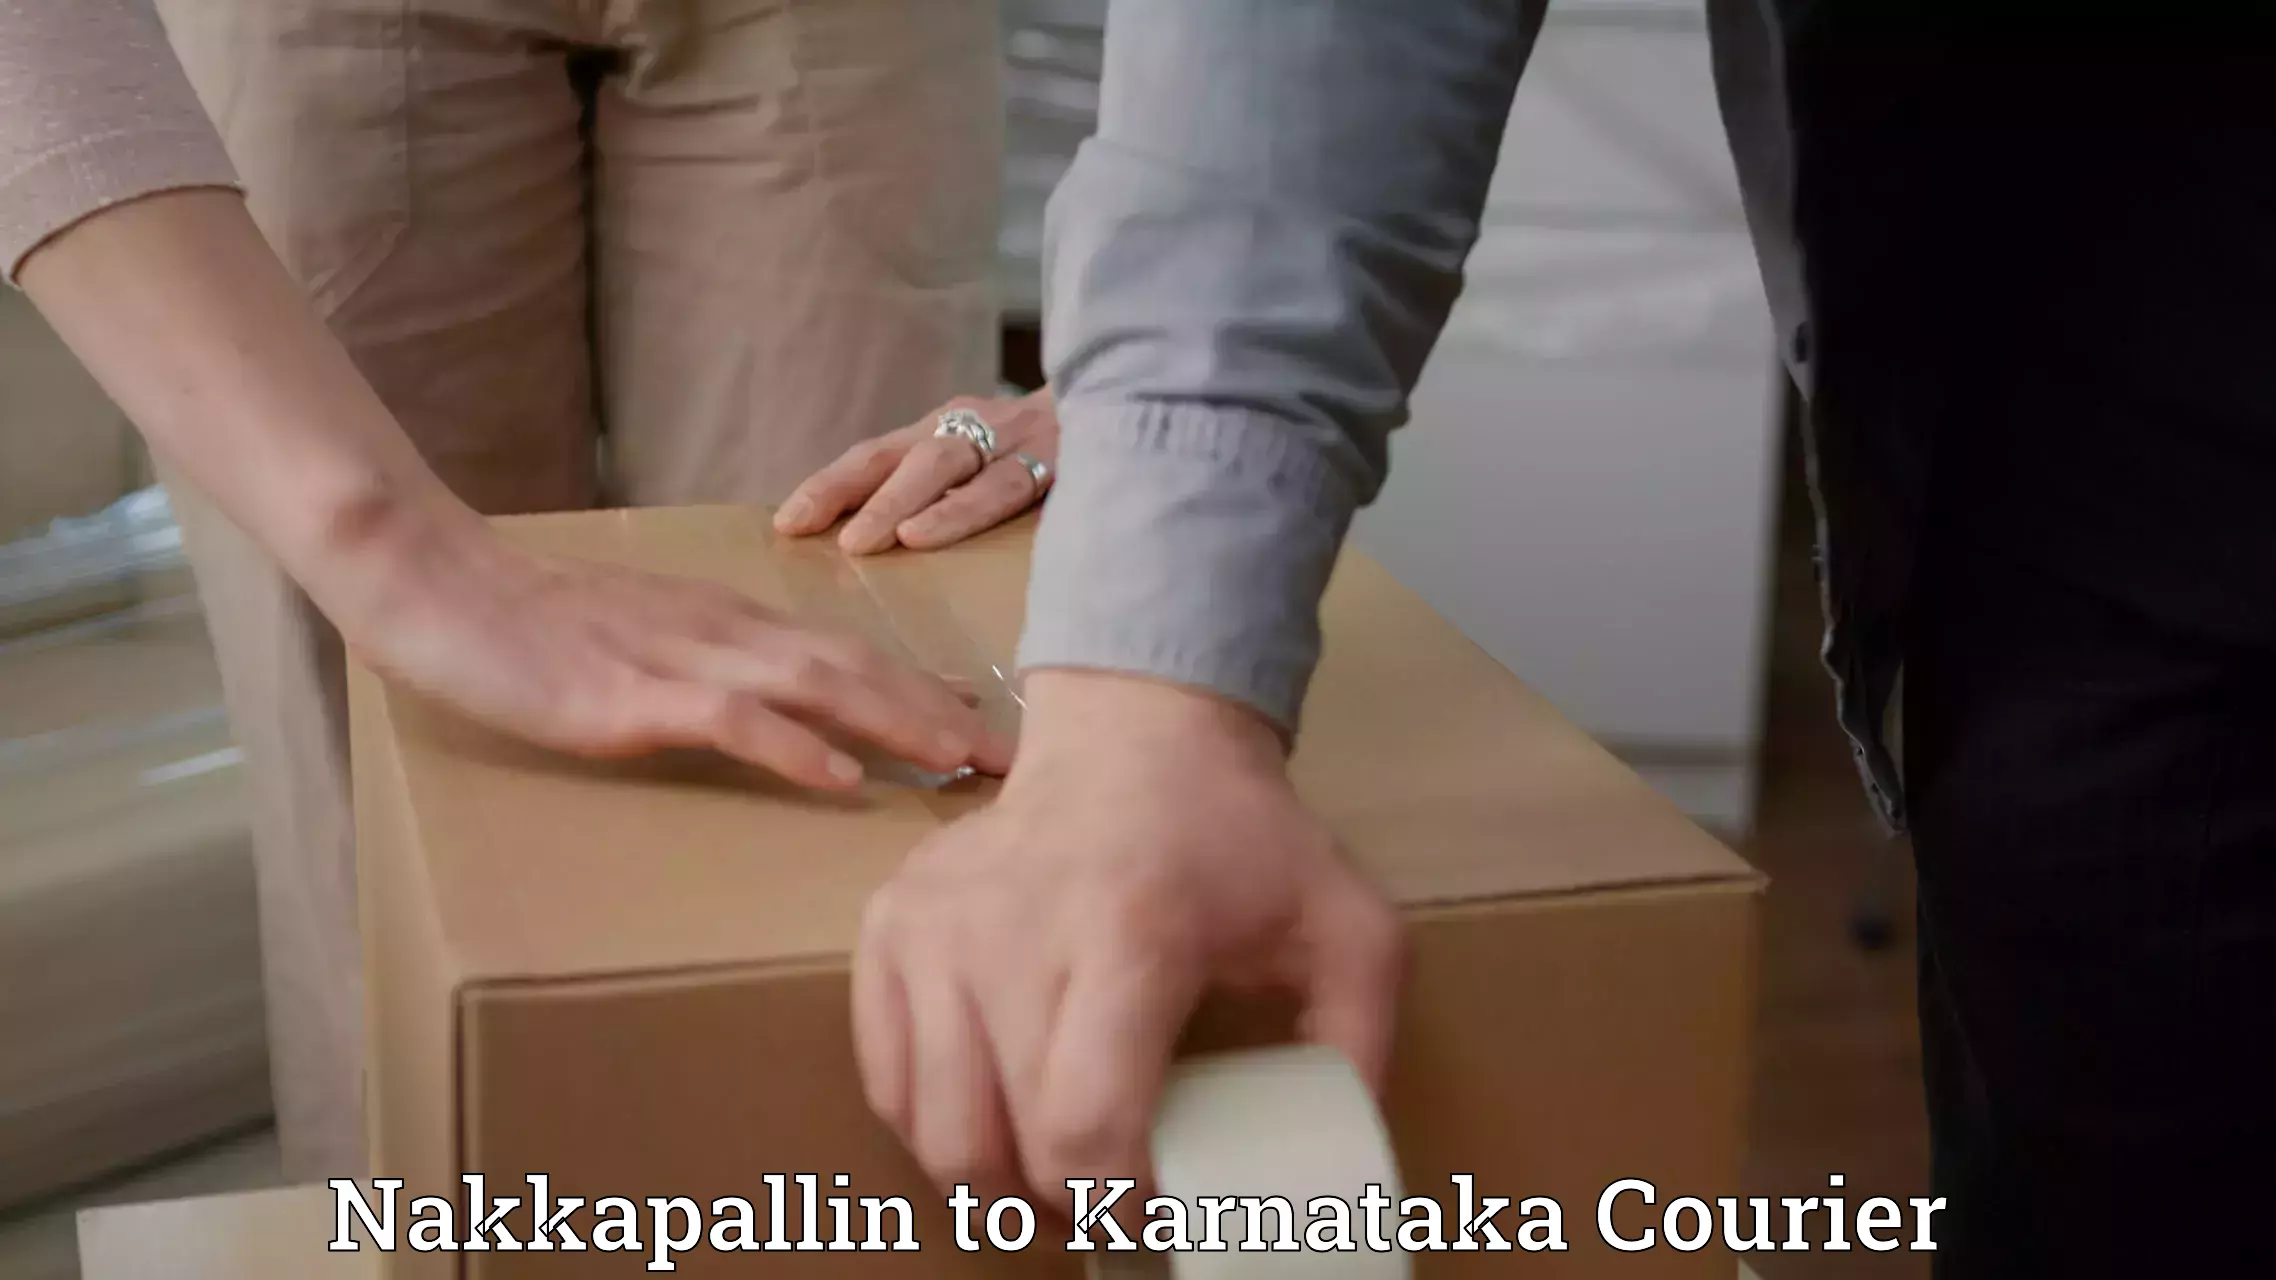 Reliable shipping partners Nakkapallin to Eedu